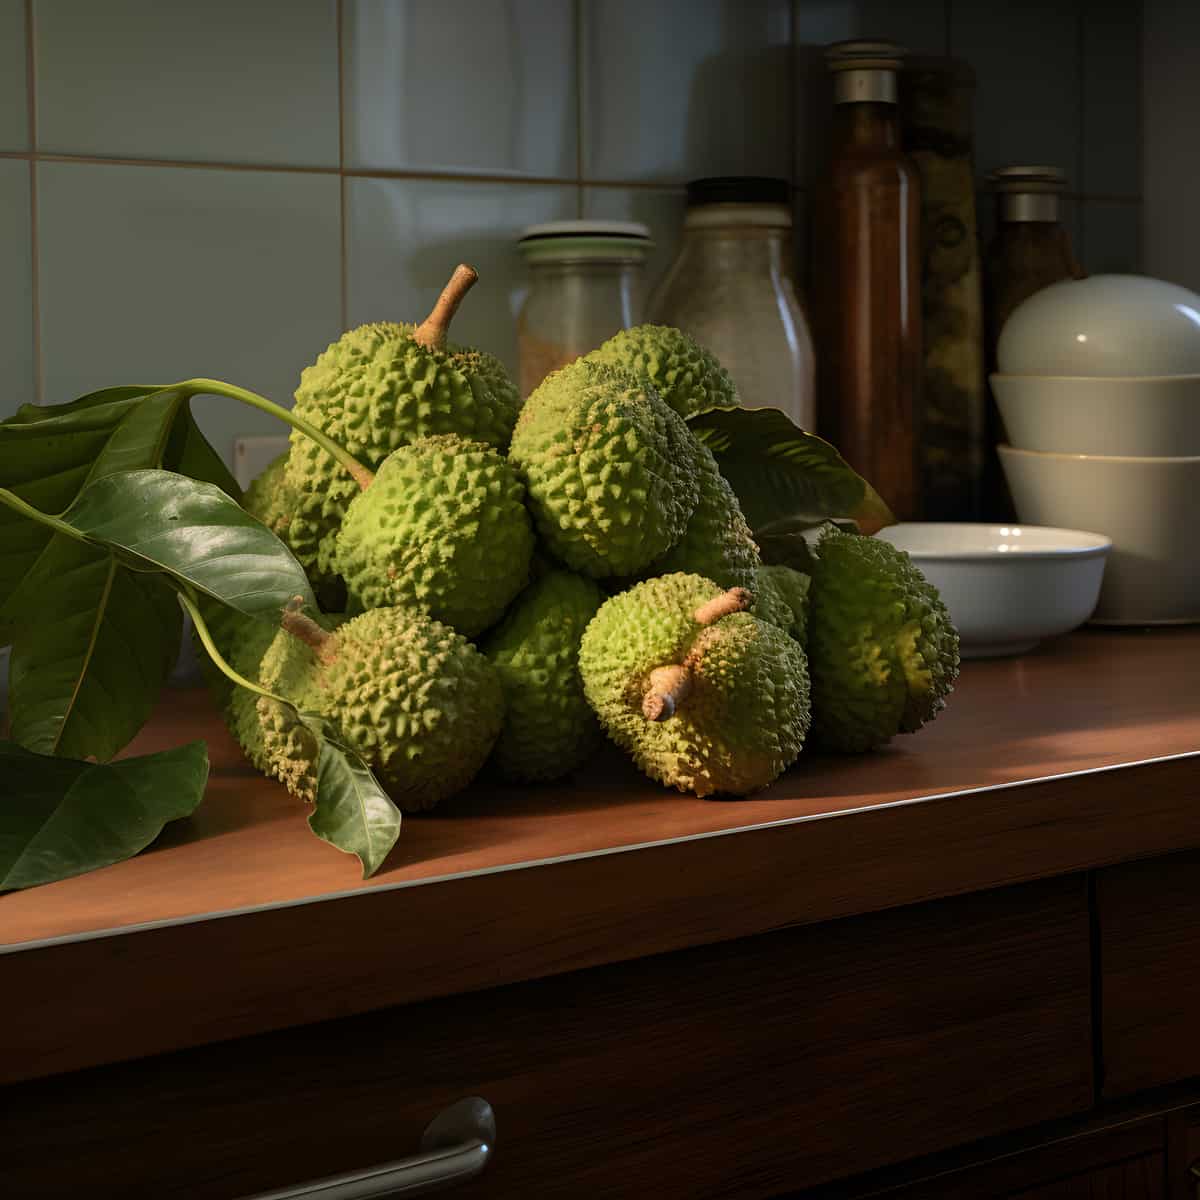 Artocarpus Lowii on a kitchen counter